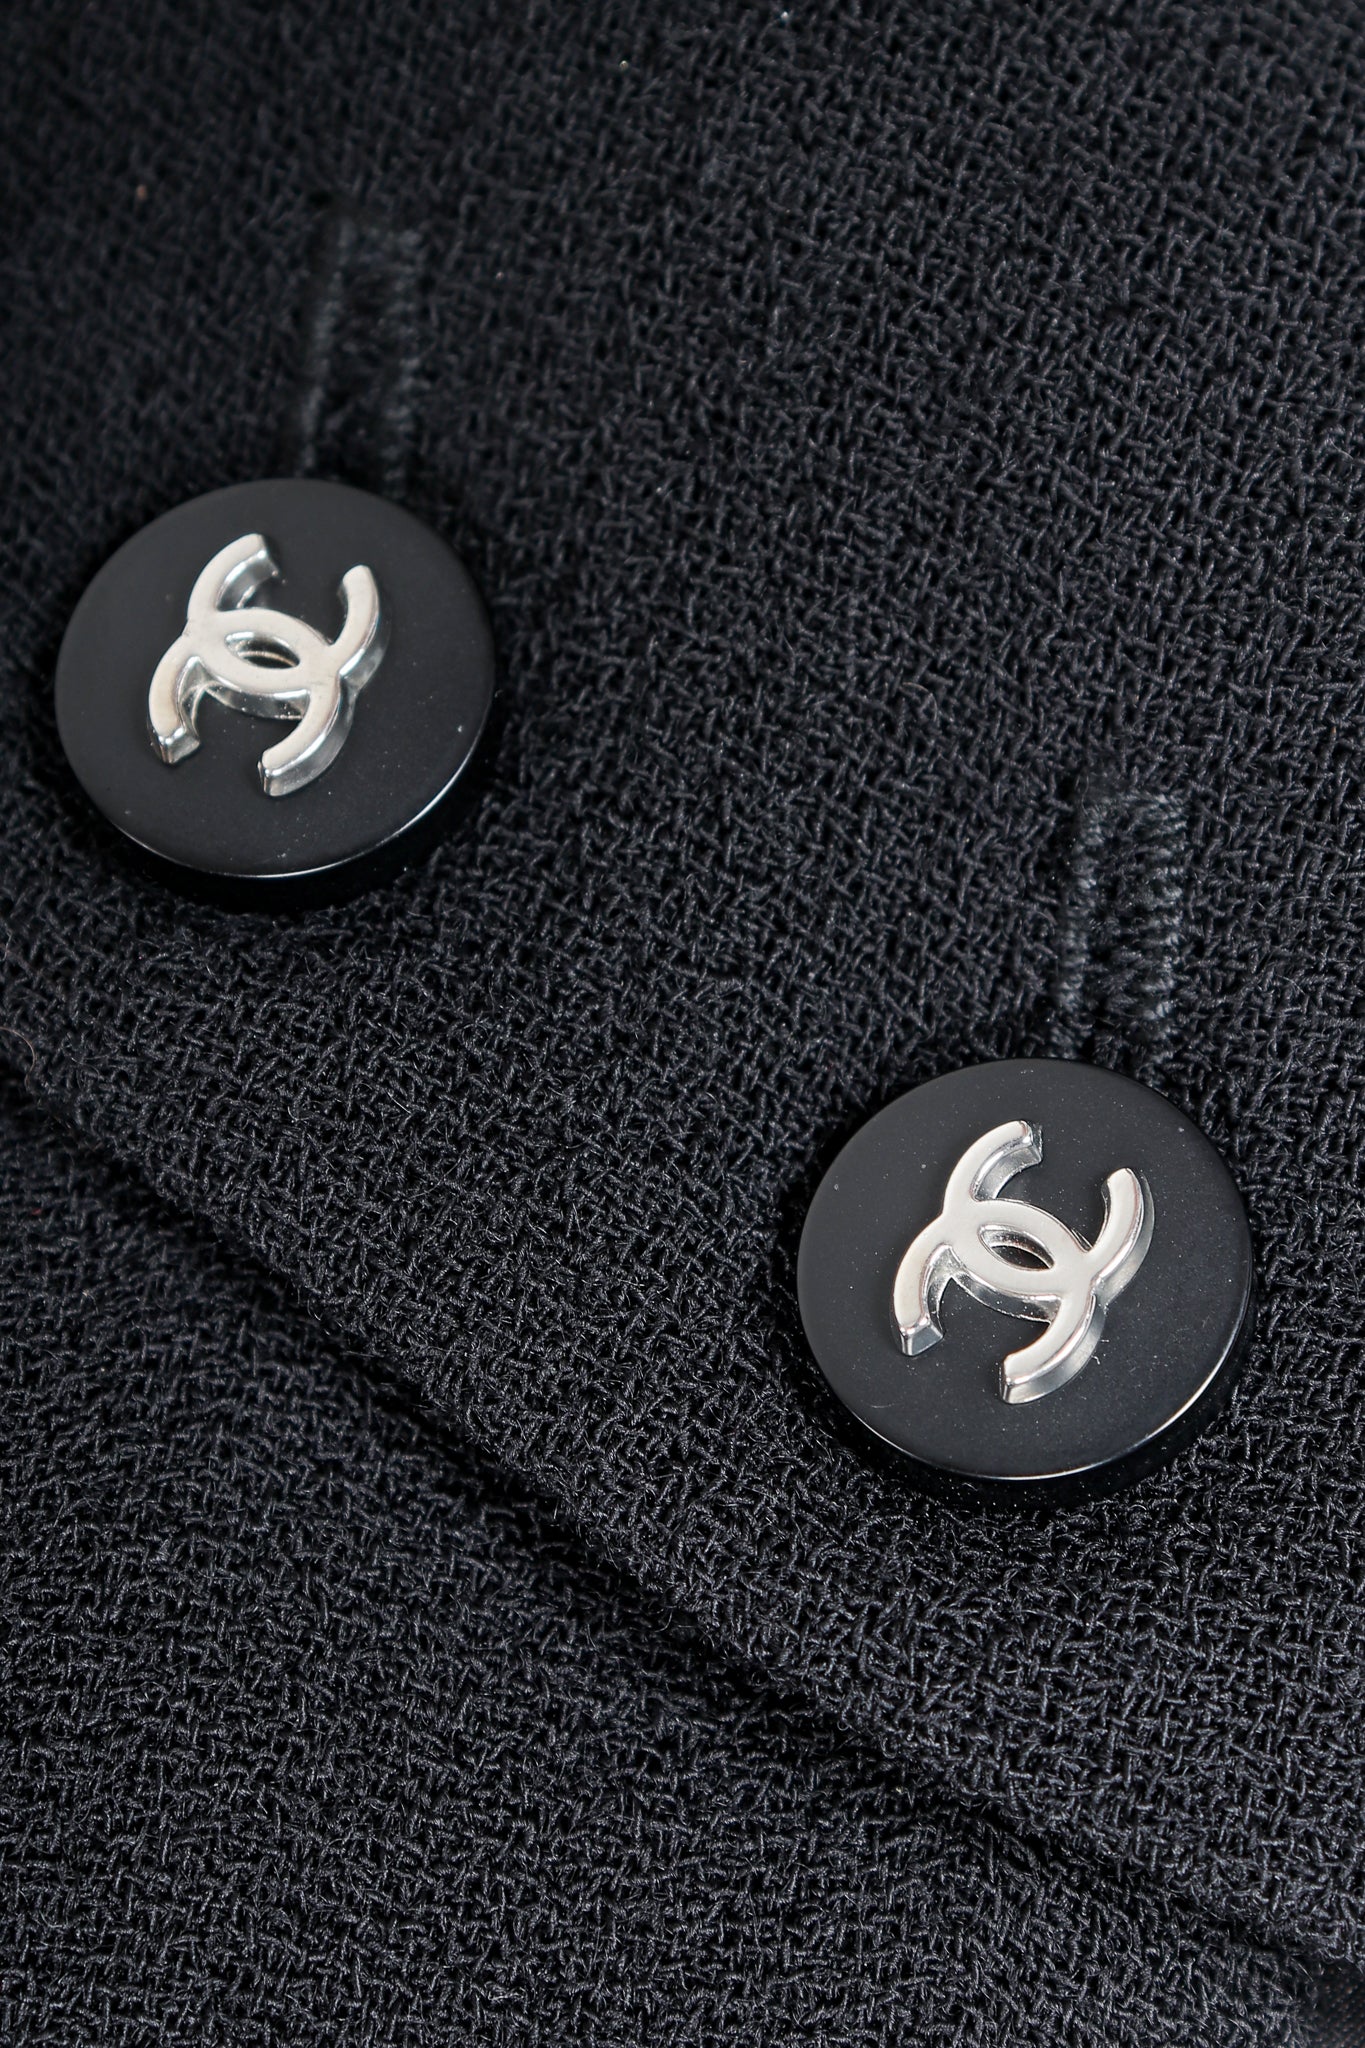 Vintage Chanel CC logo buttons on black